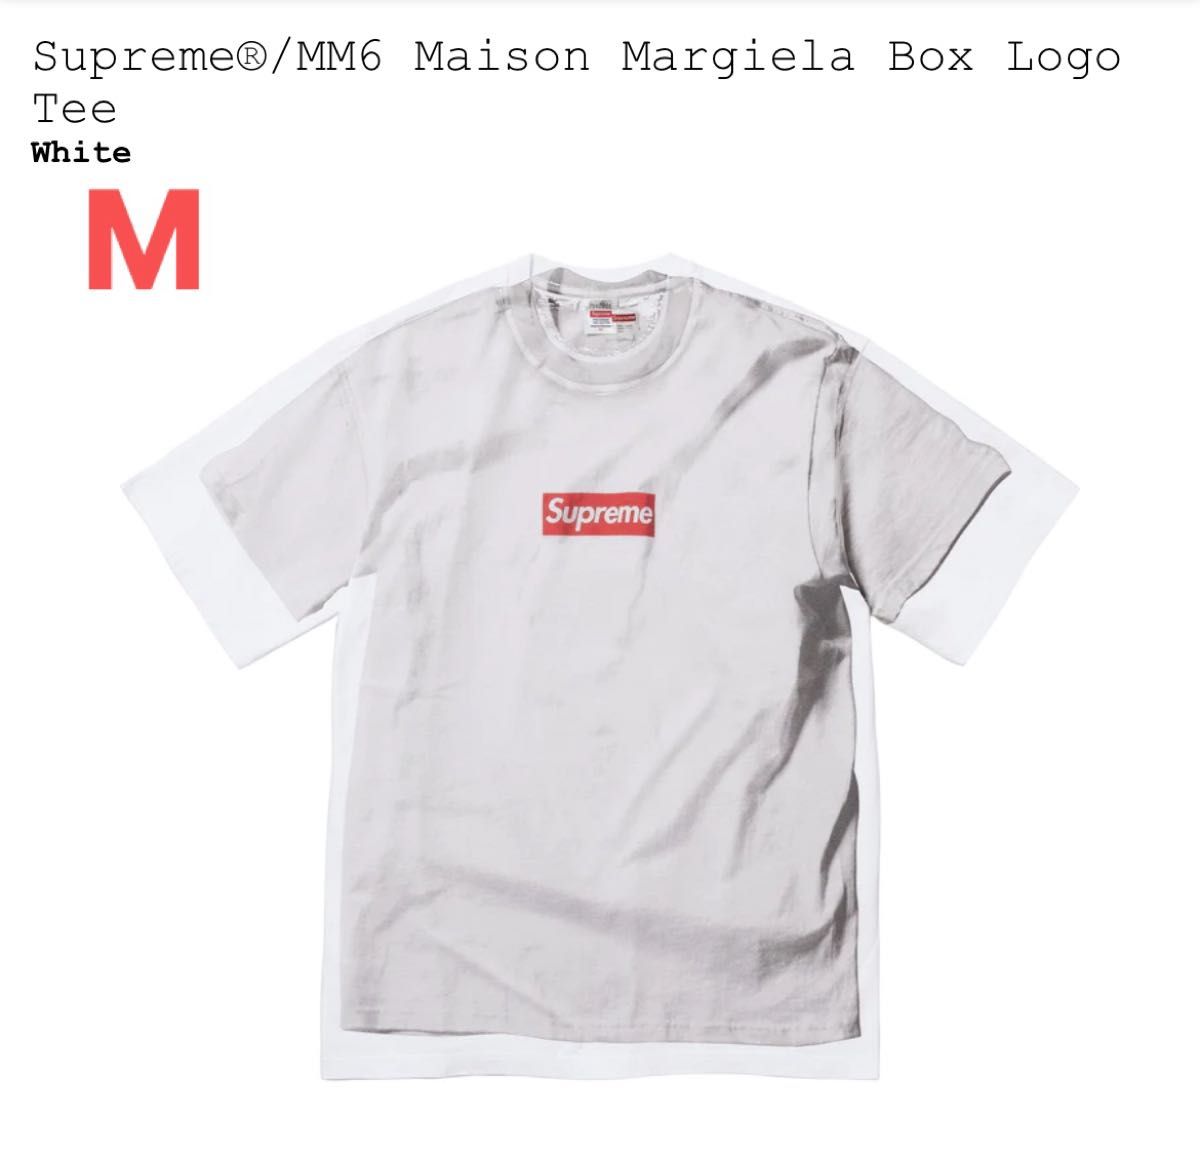 Supreme MM6 Maison Margiela Box Logo Tee シュプリーム マルジェラ ボックスロゴ Tシャツ